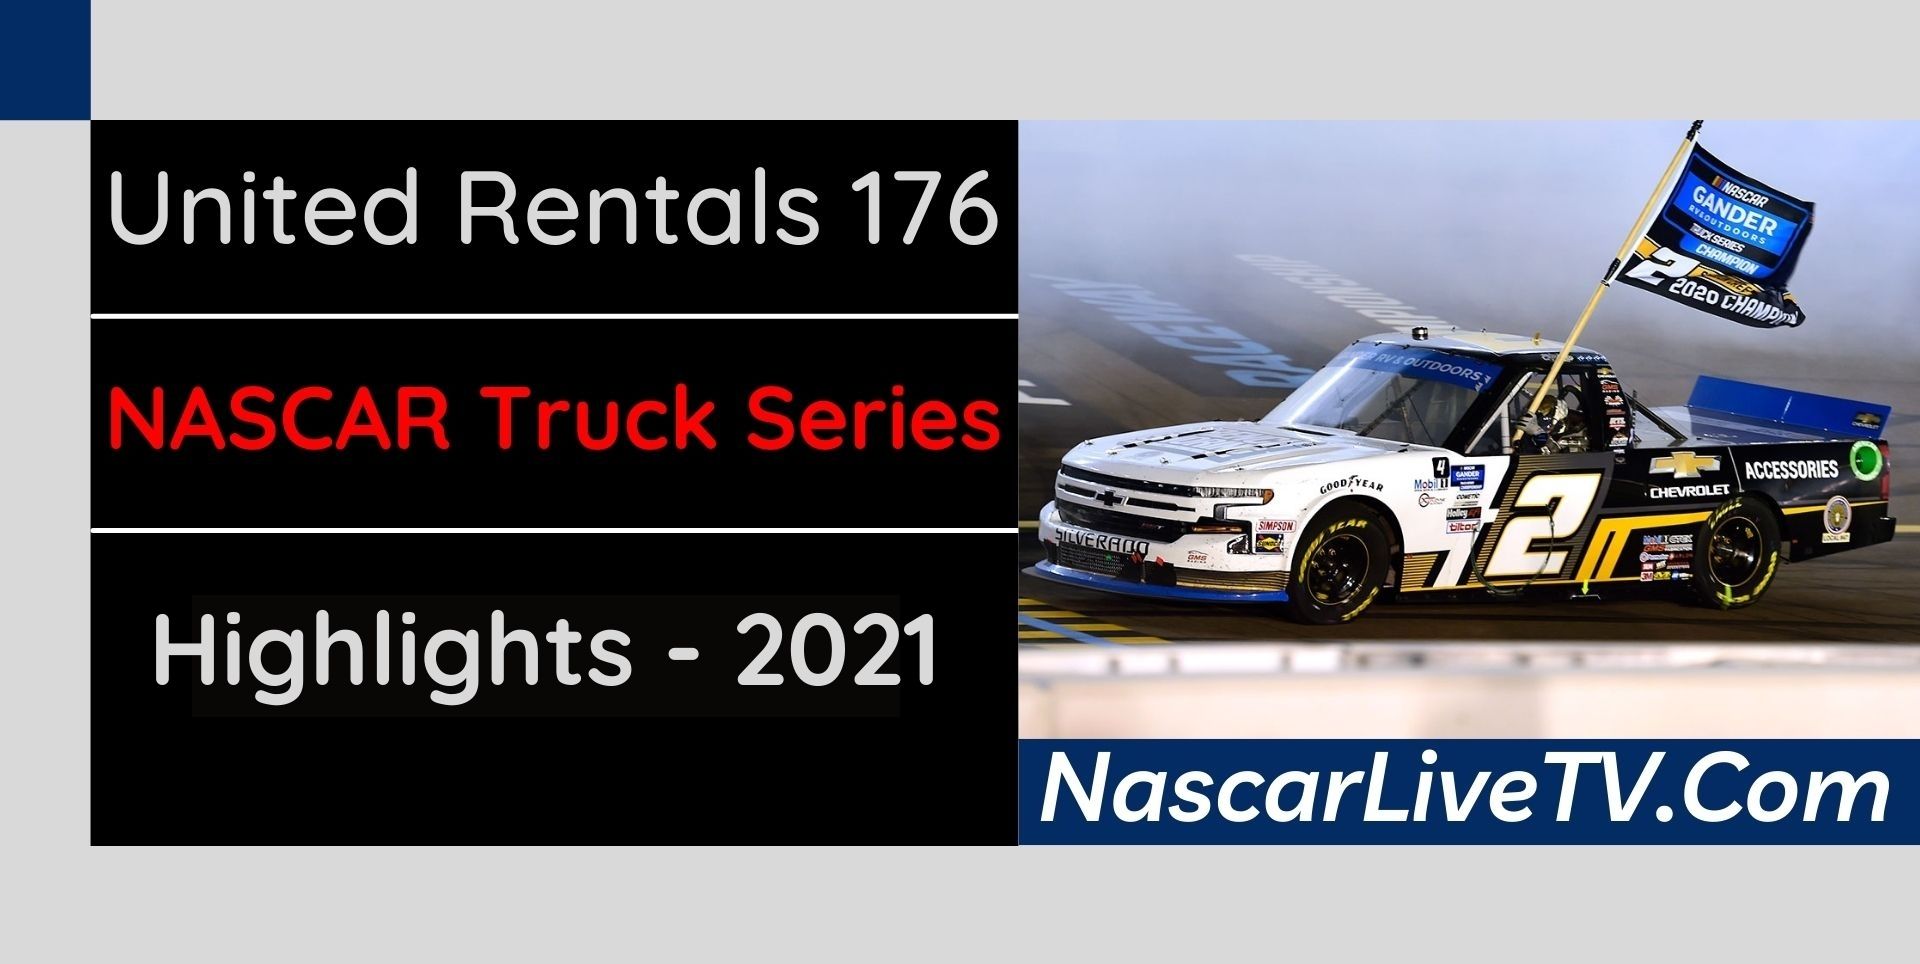 United Rentals 176 Highlights Nascar Truck Series 2021